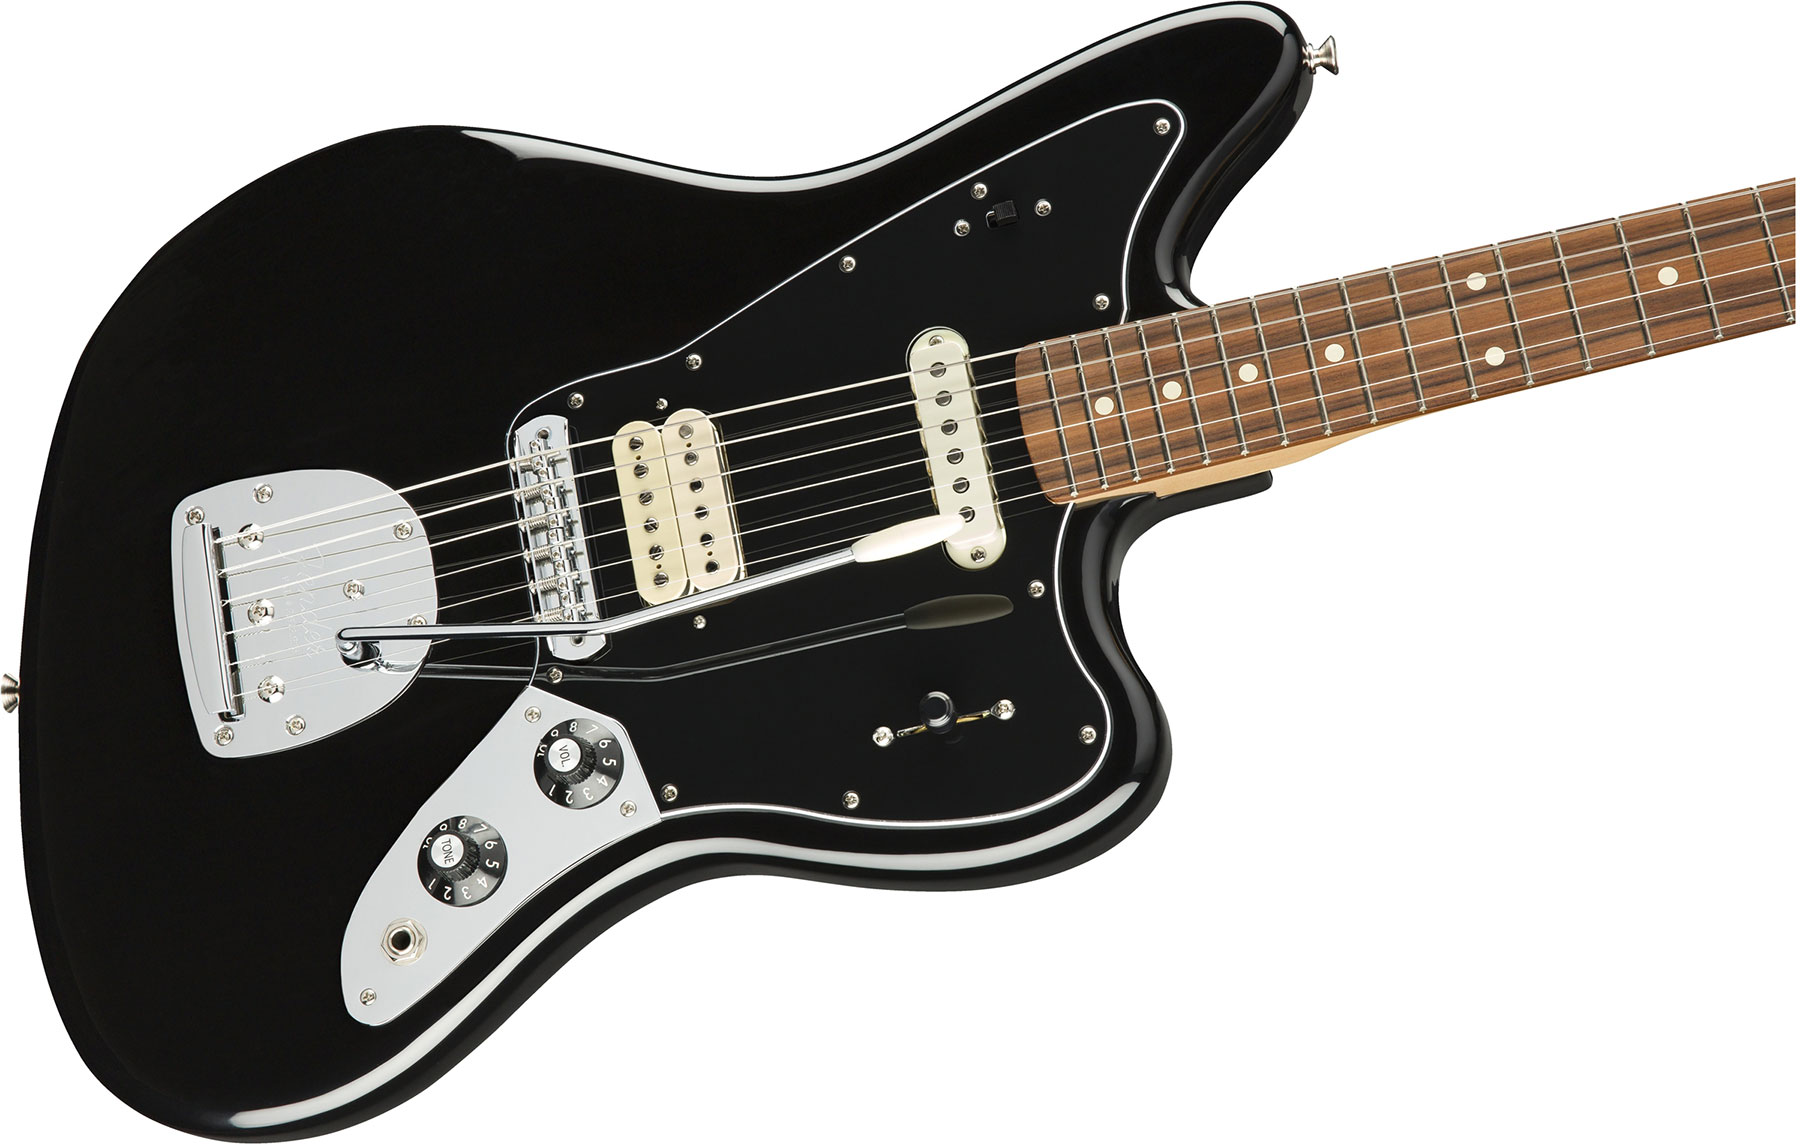 Fender Jaguar Player Mex Hs Pf - Black - Retro rock electric guitar - Variation 2